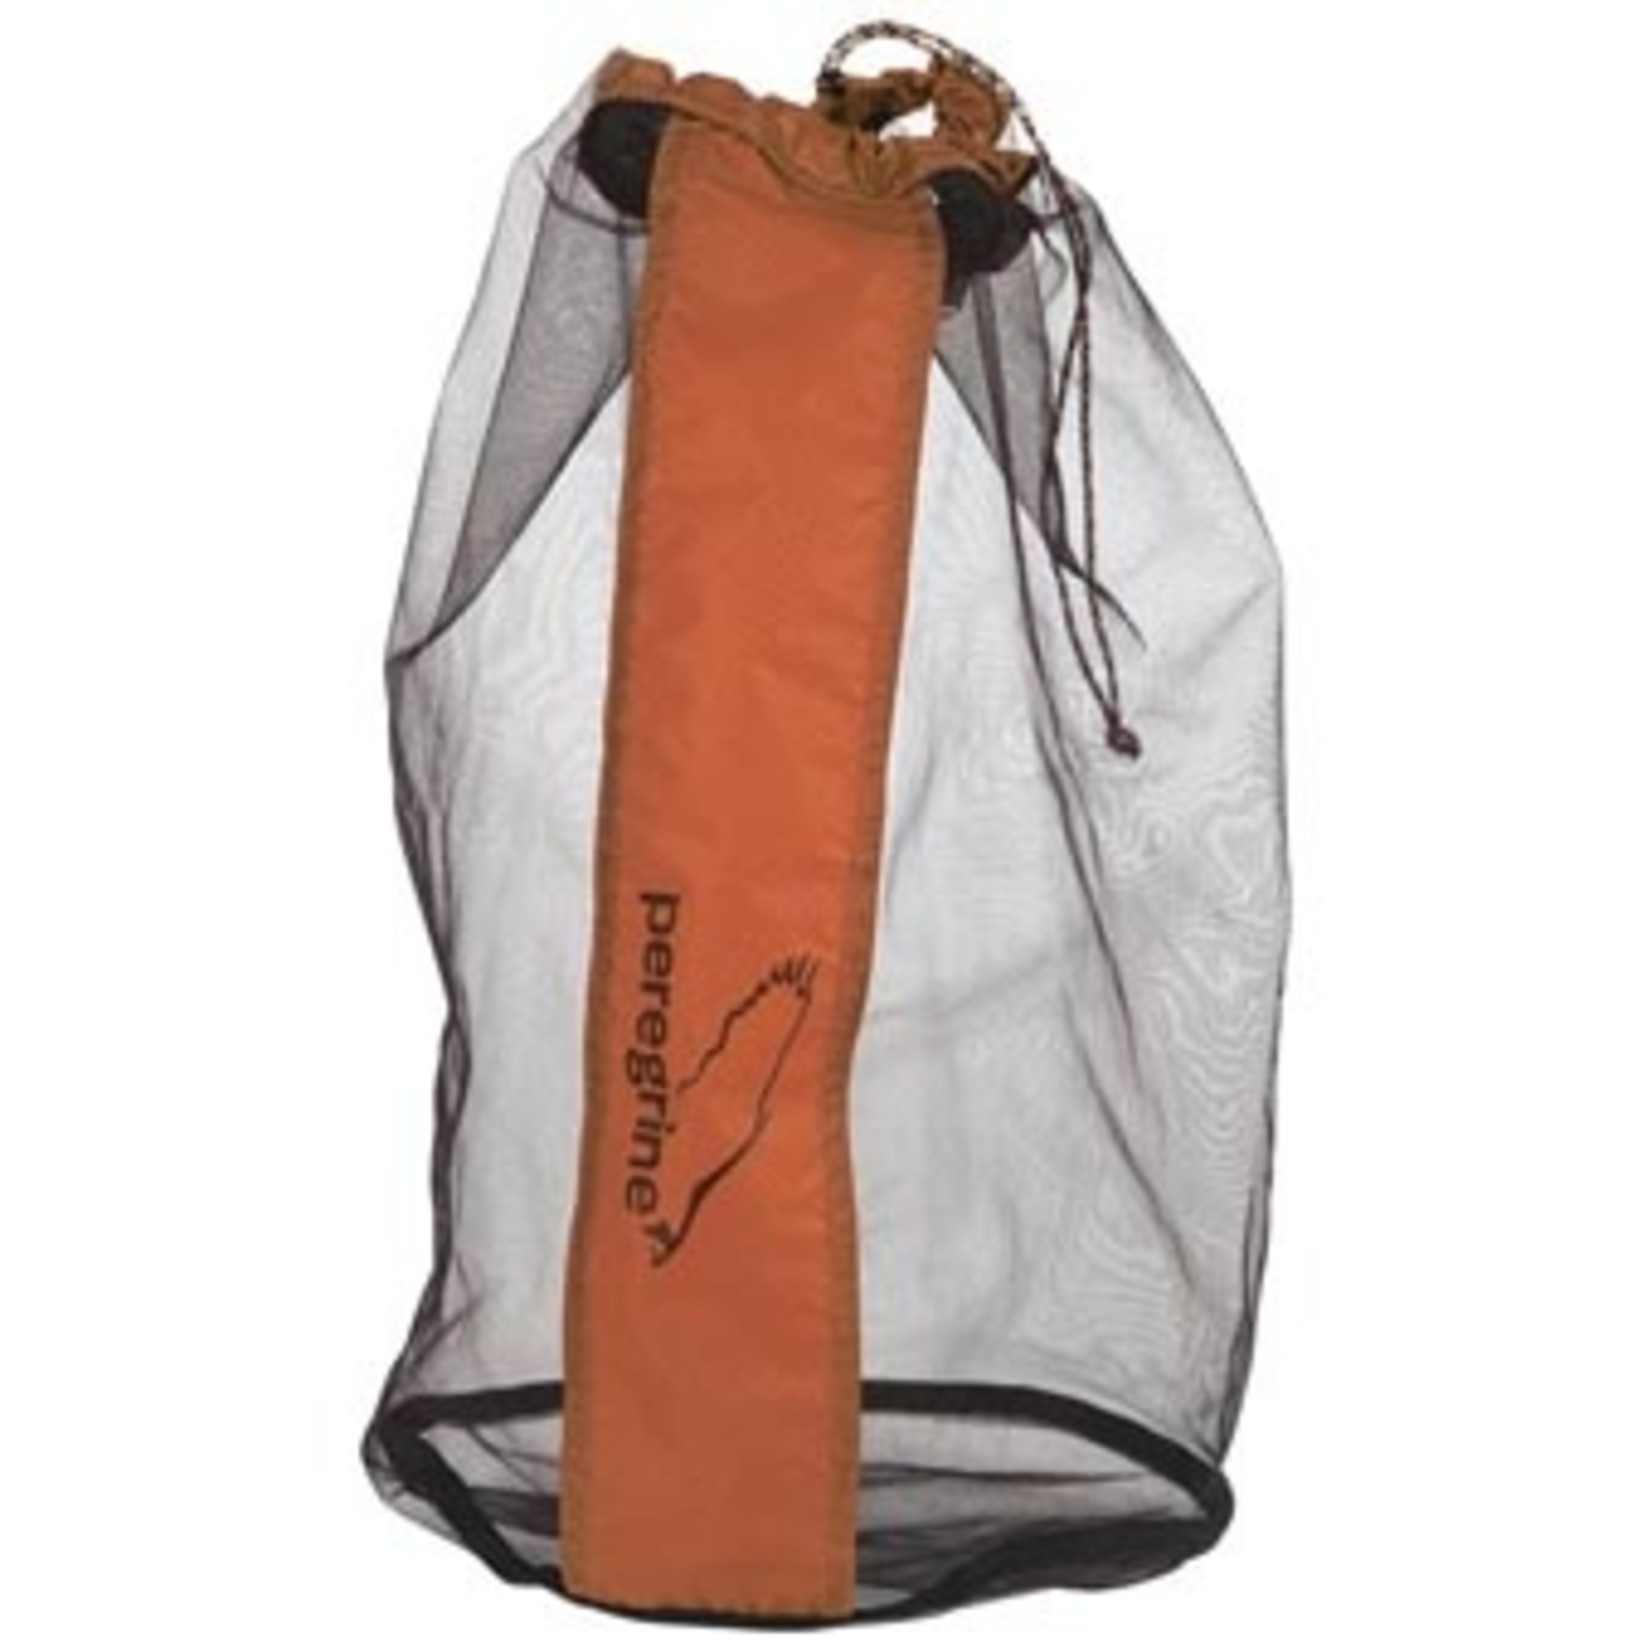 Peregrine Ultralight compression bag